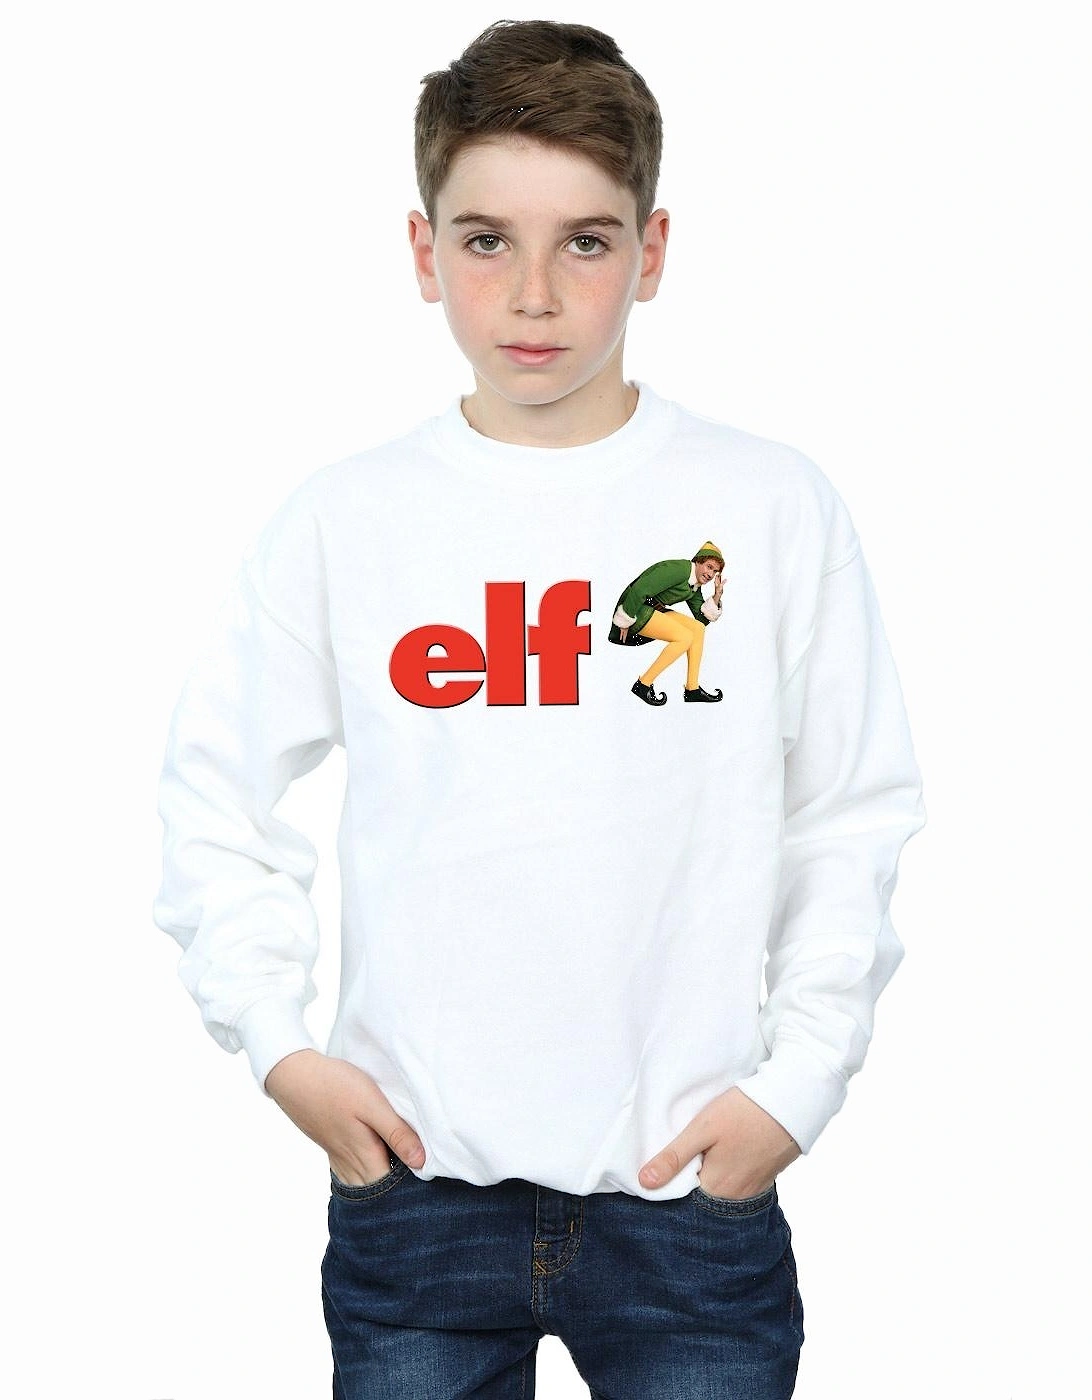 Boys Crouching Logo Sweatshirt